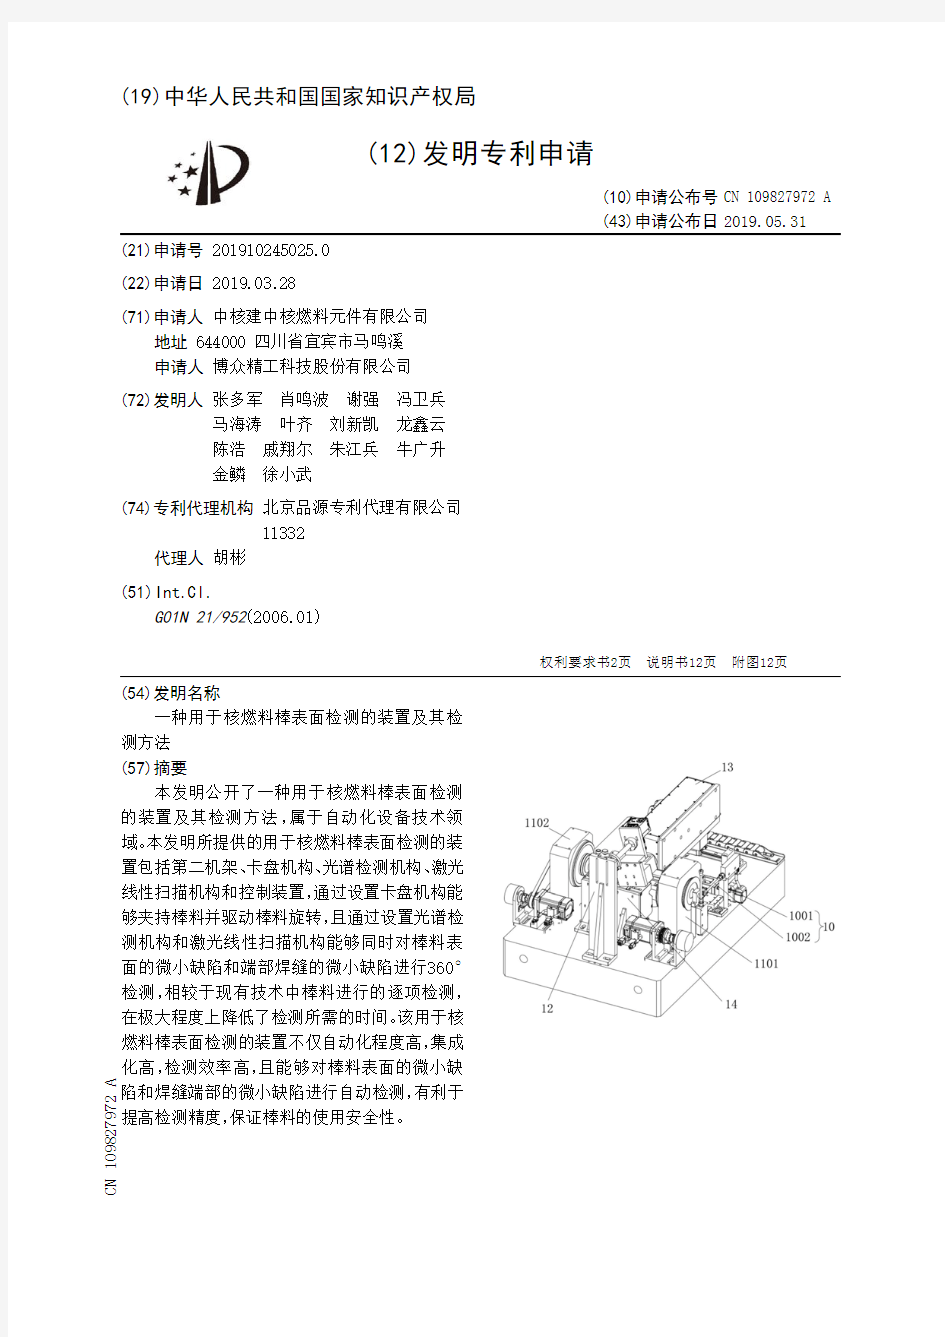 【CN109827972A】一种用于核燃料棒表面检测的装置及其检测方法【专利】